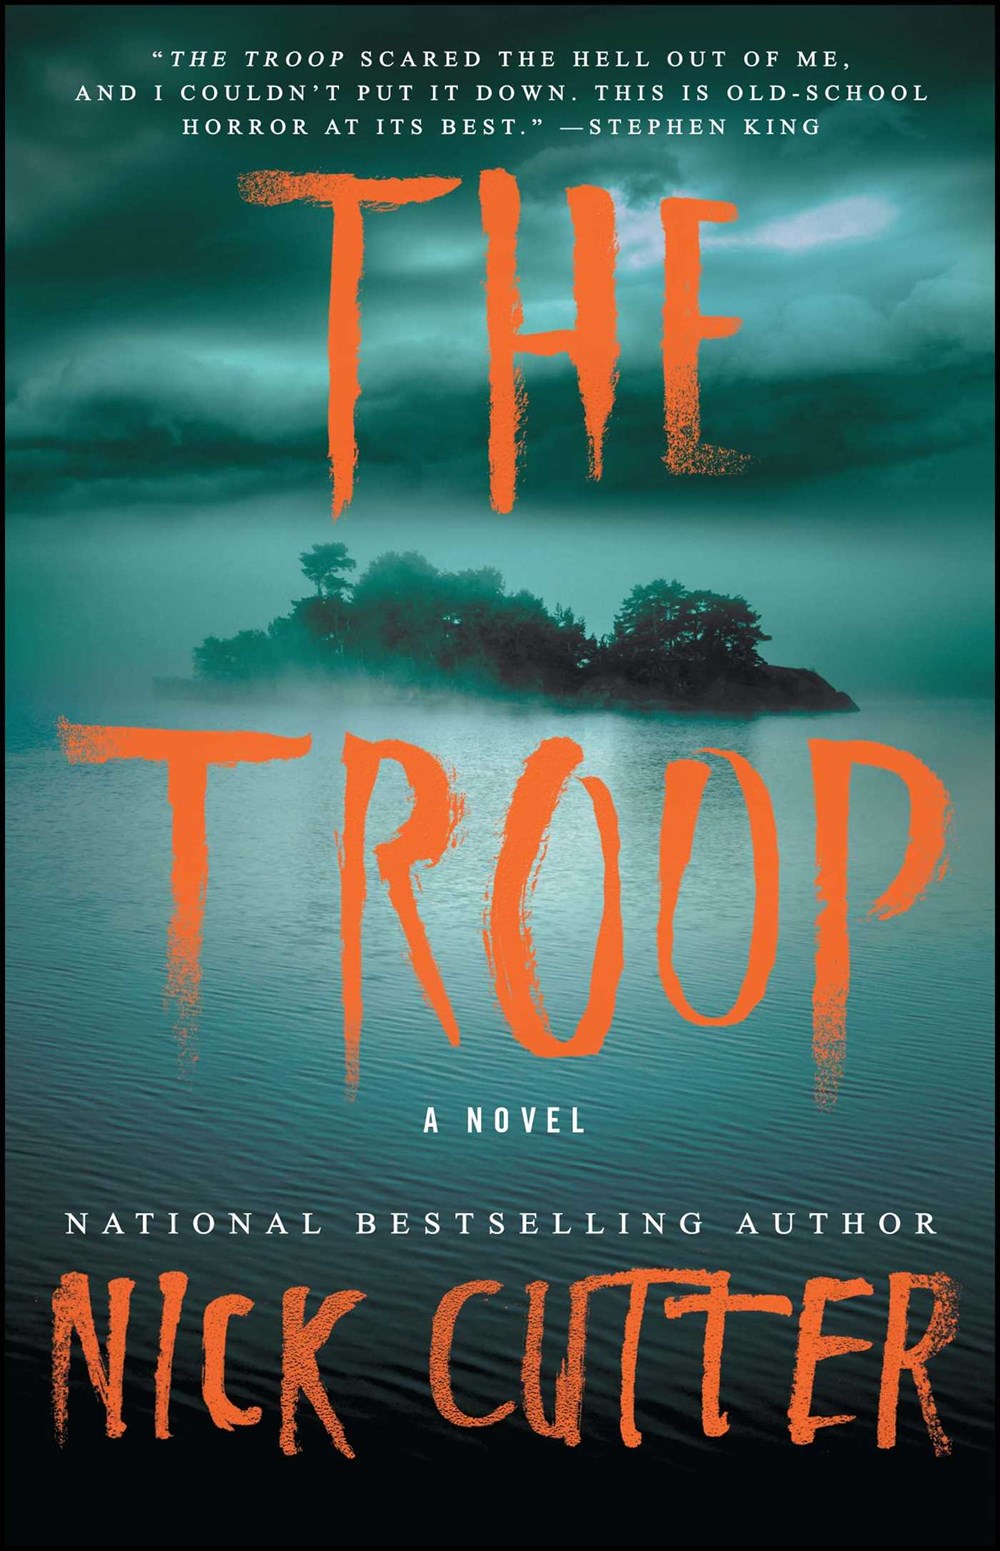 The Troop : A Novel